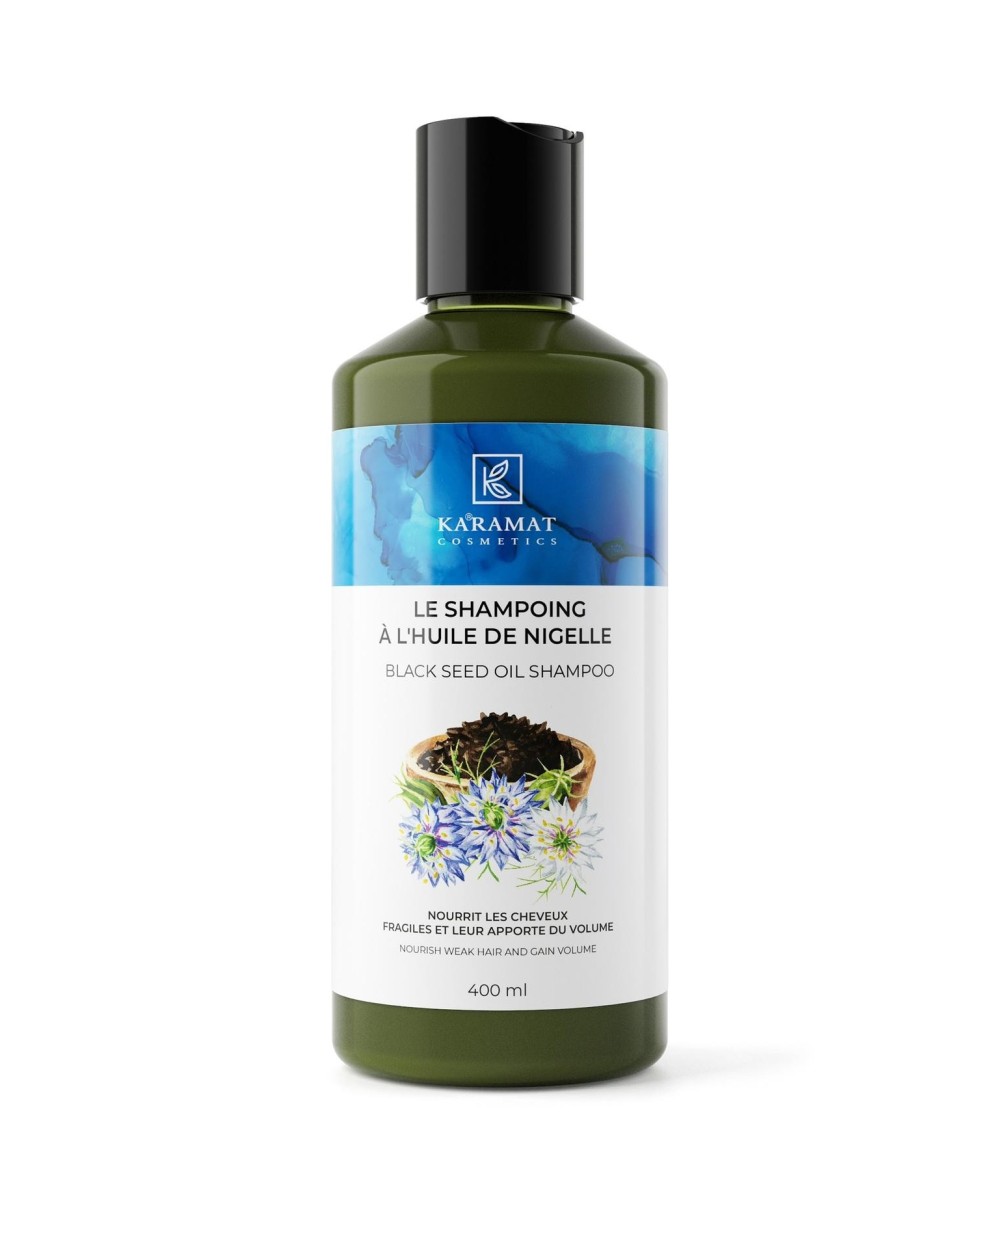 Karamat black seed oil shampoo